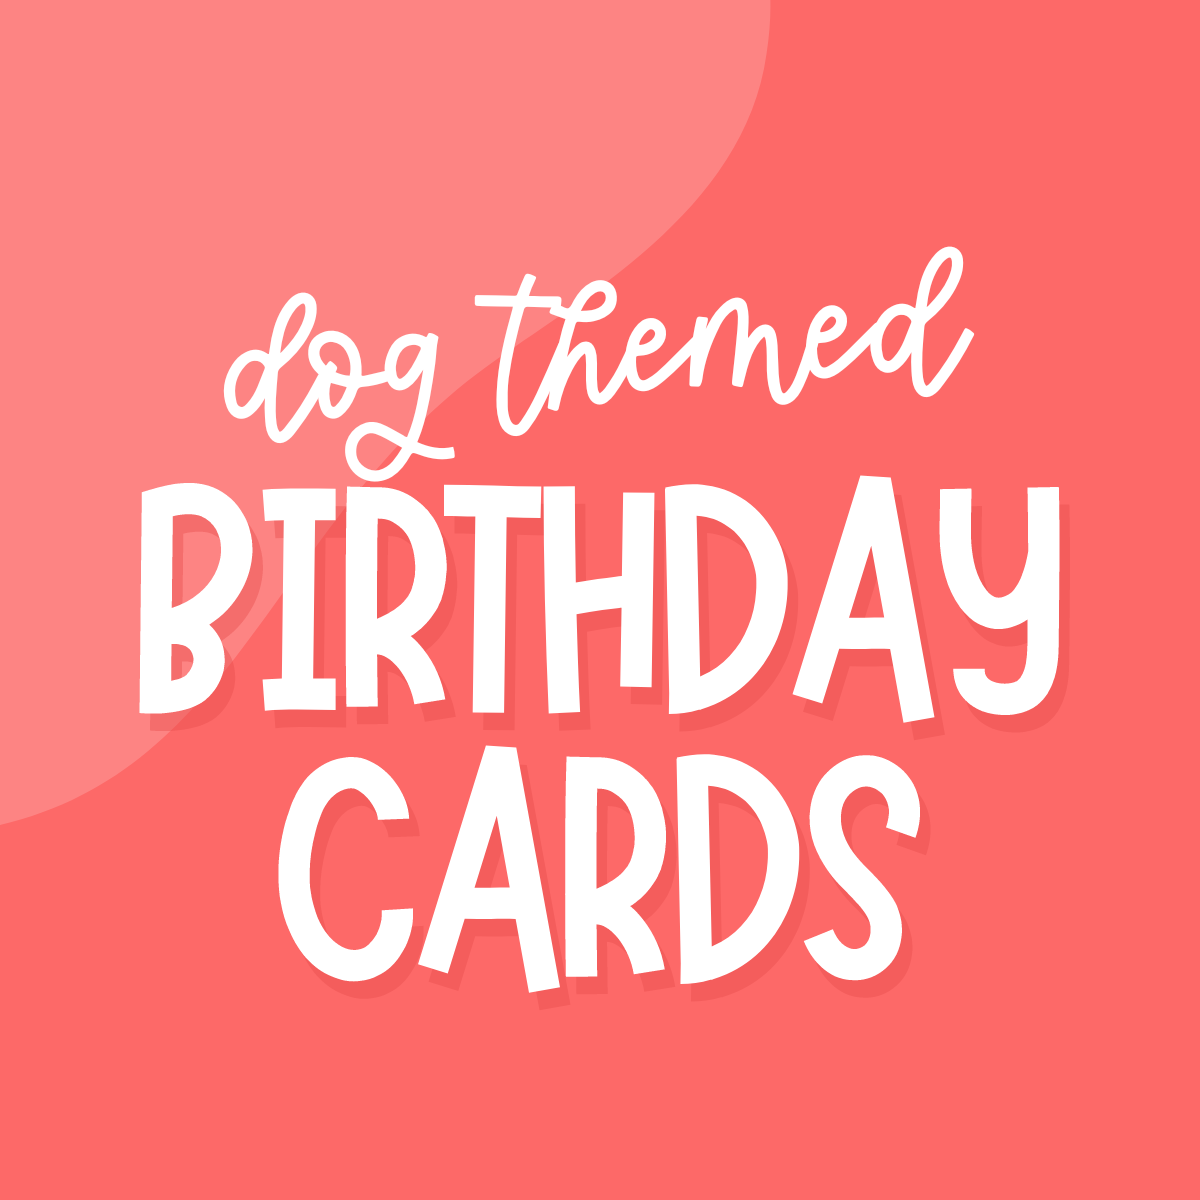 Dog Themed Birthday Cards